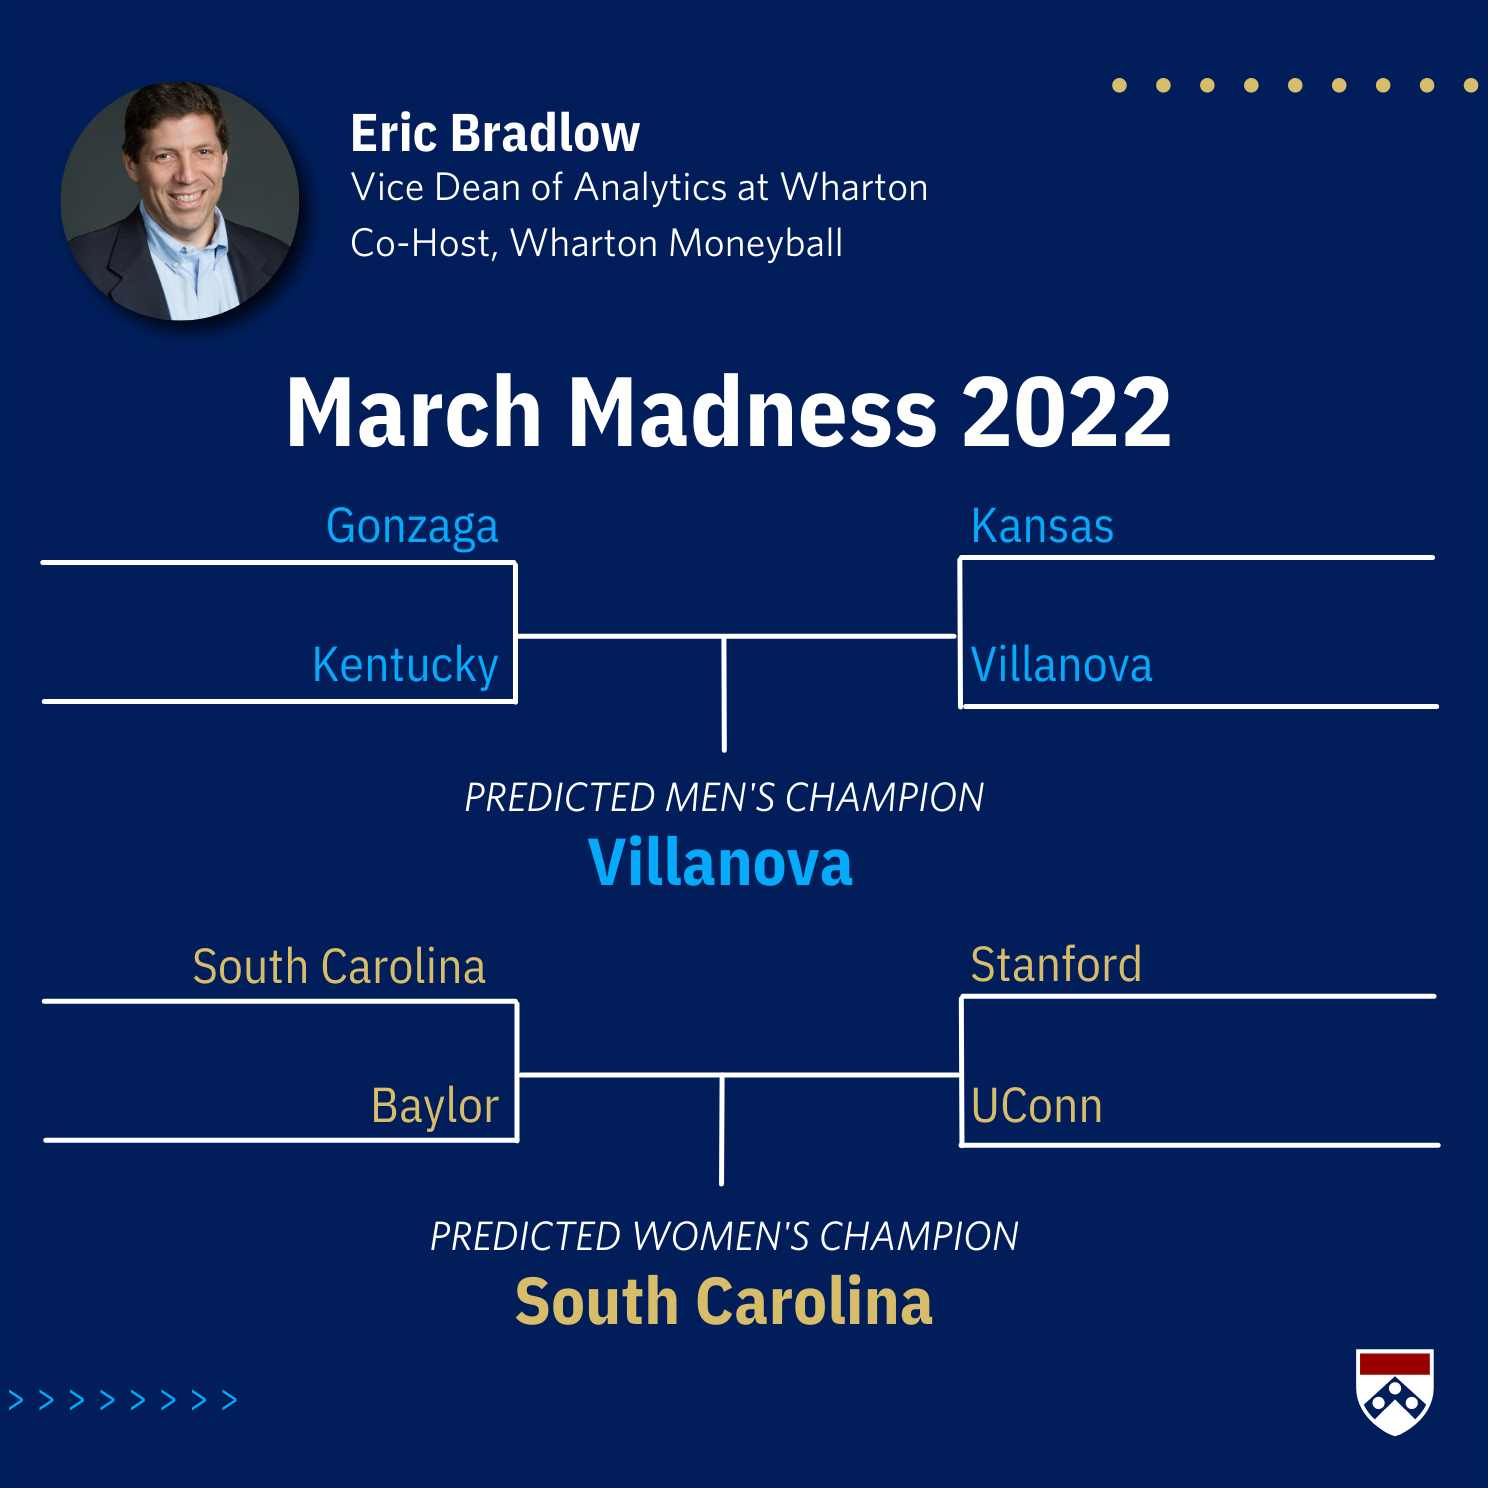 Eric Bradlow's Final Four Predictions